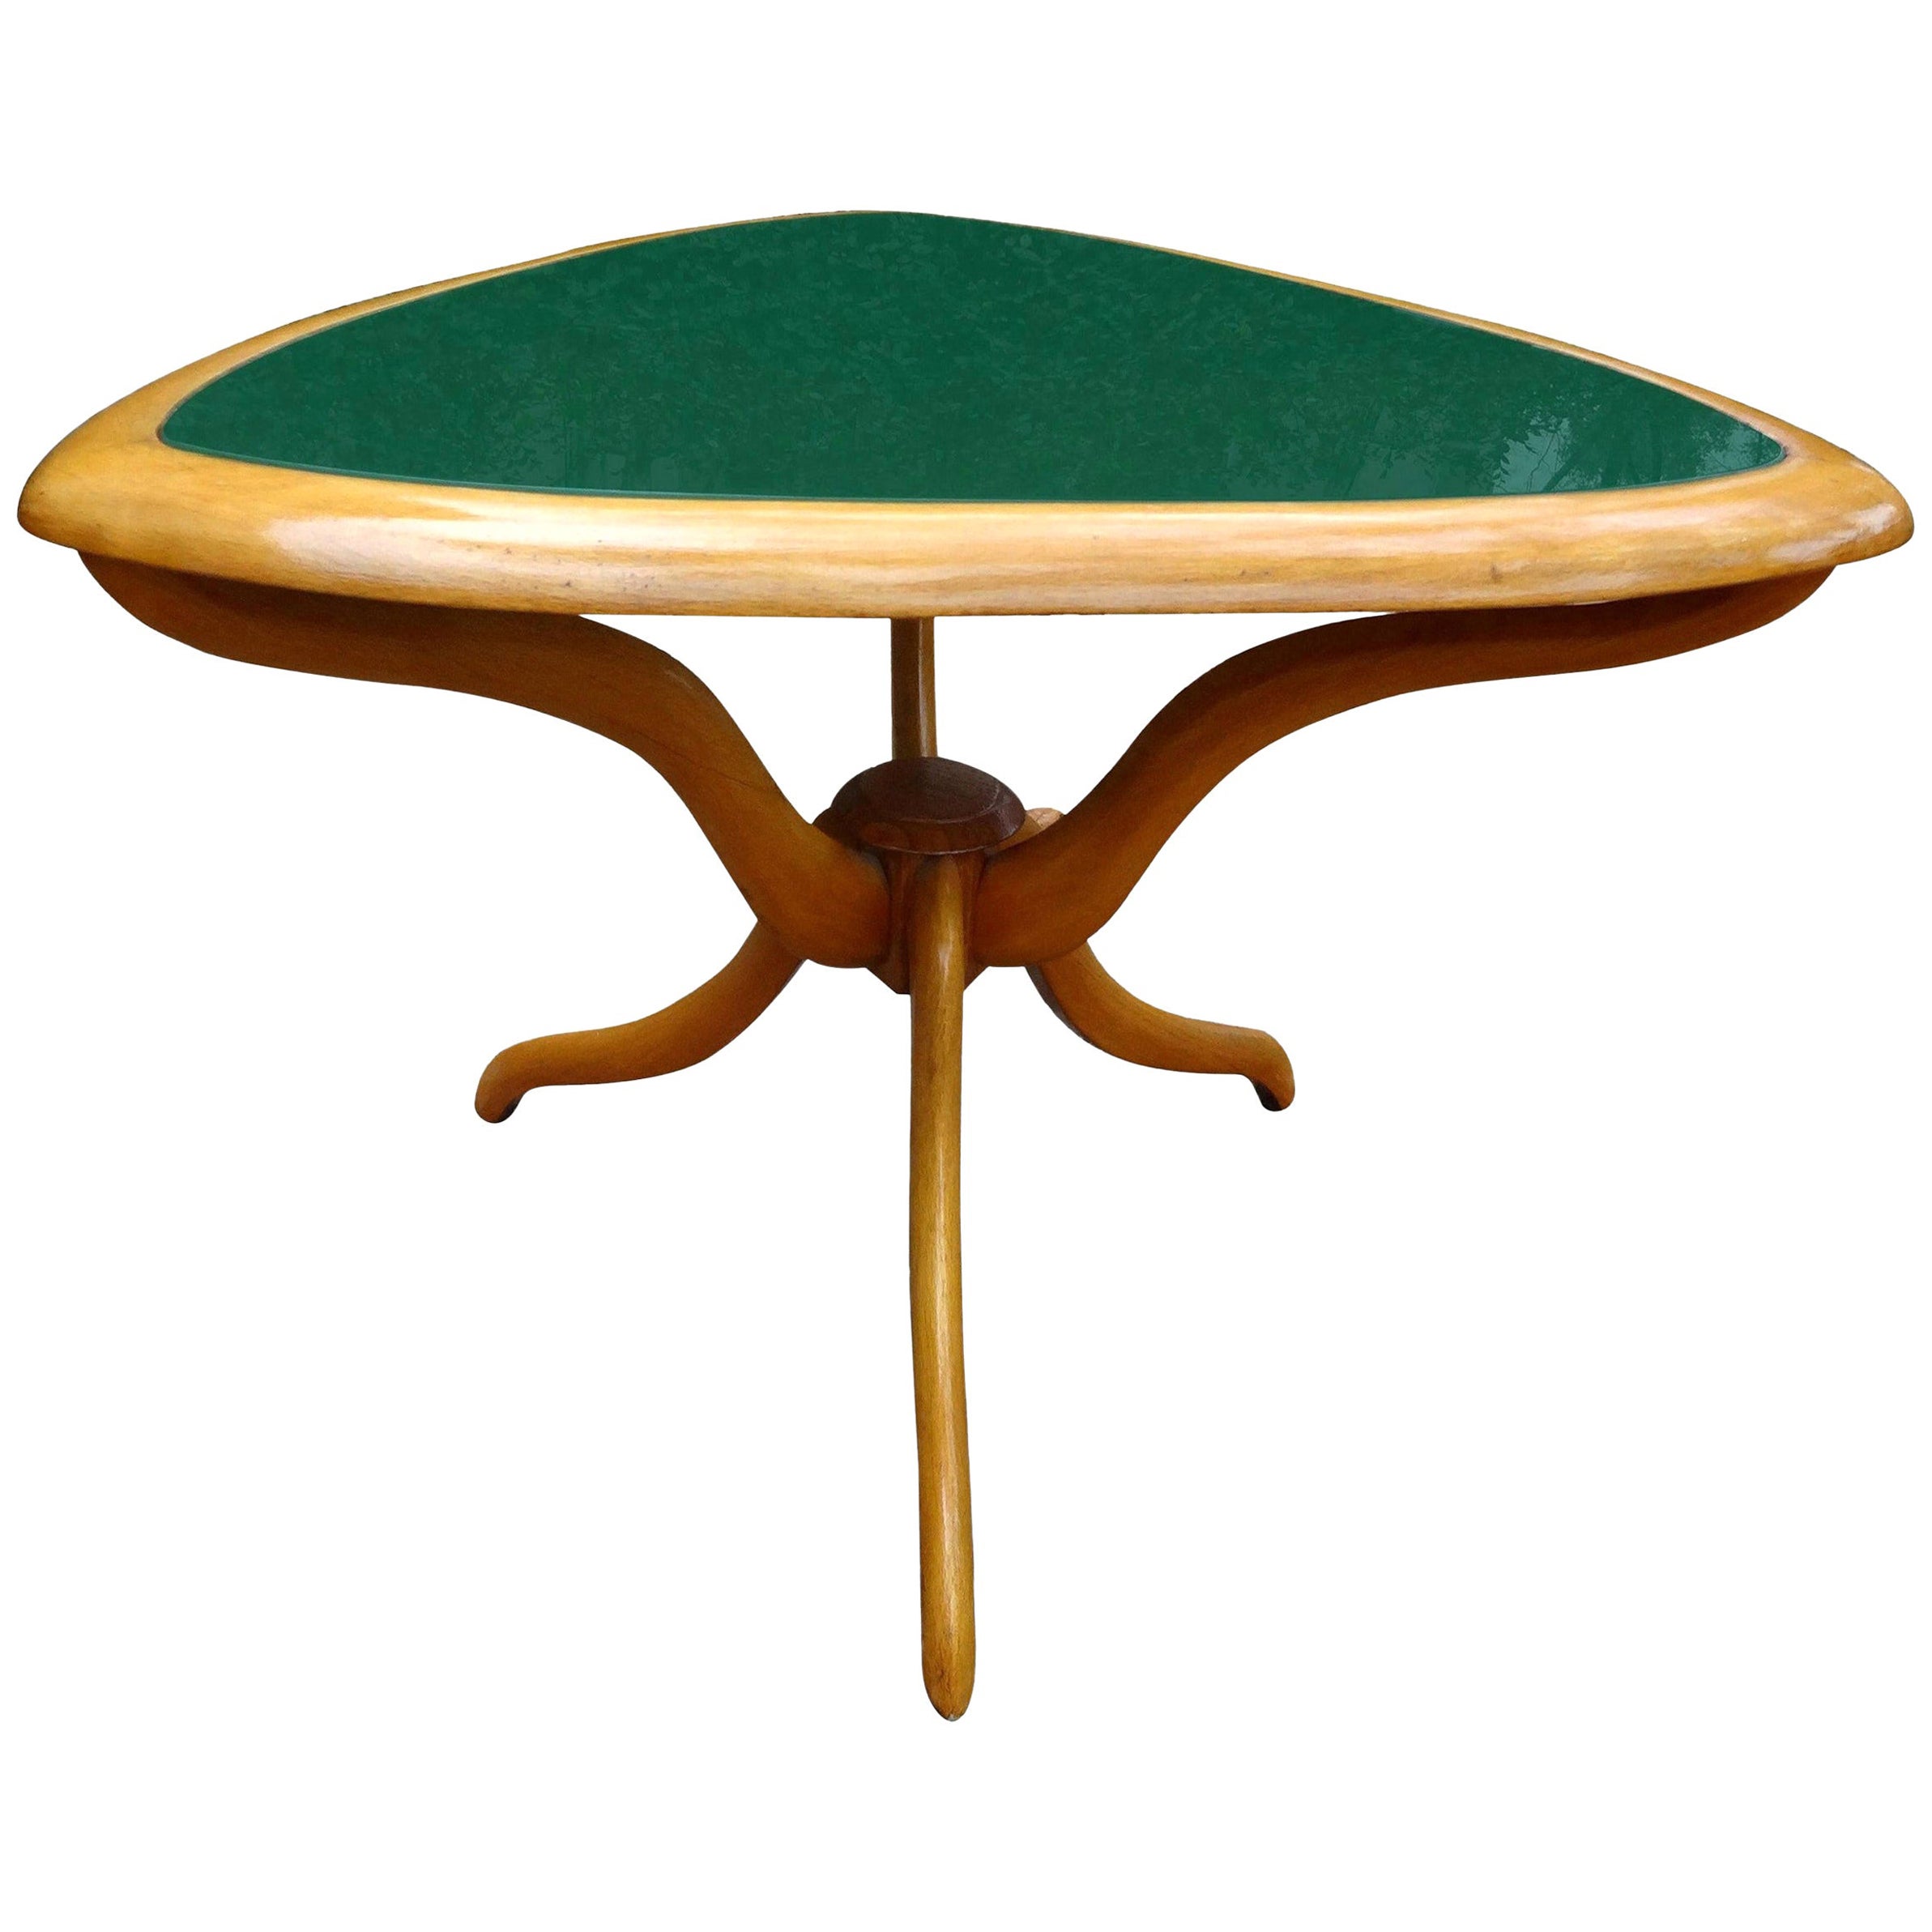 Italian Modern Gio Ponti Inspired Table